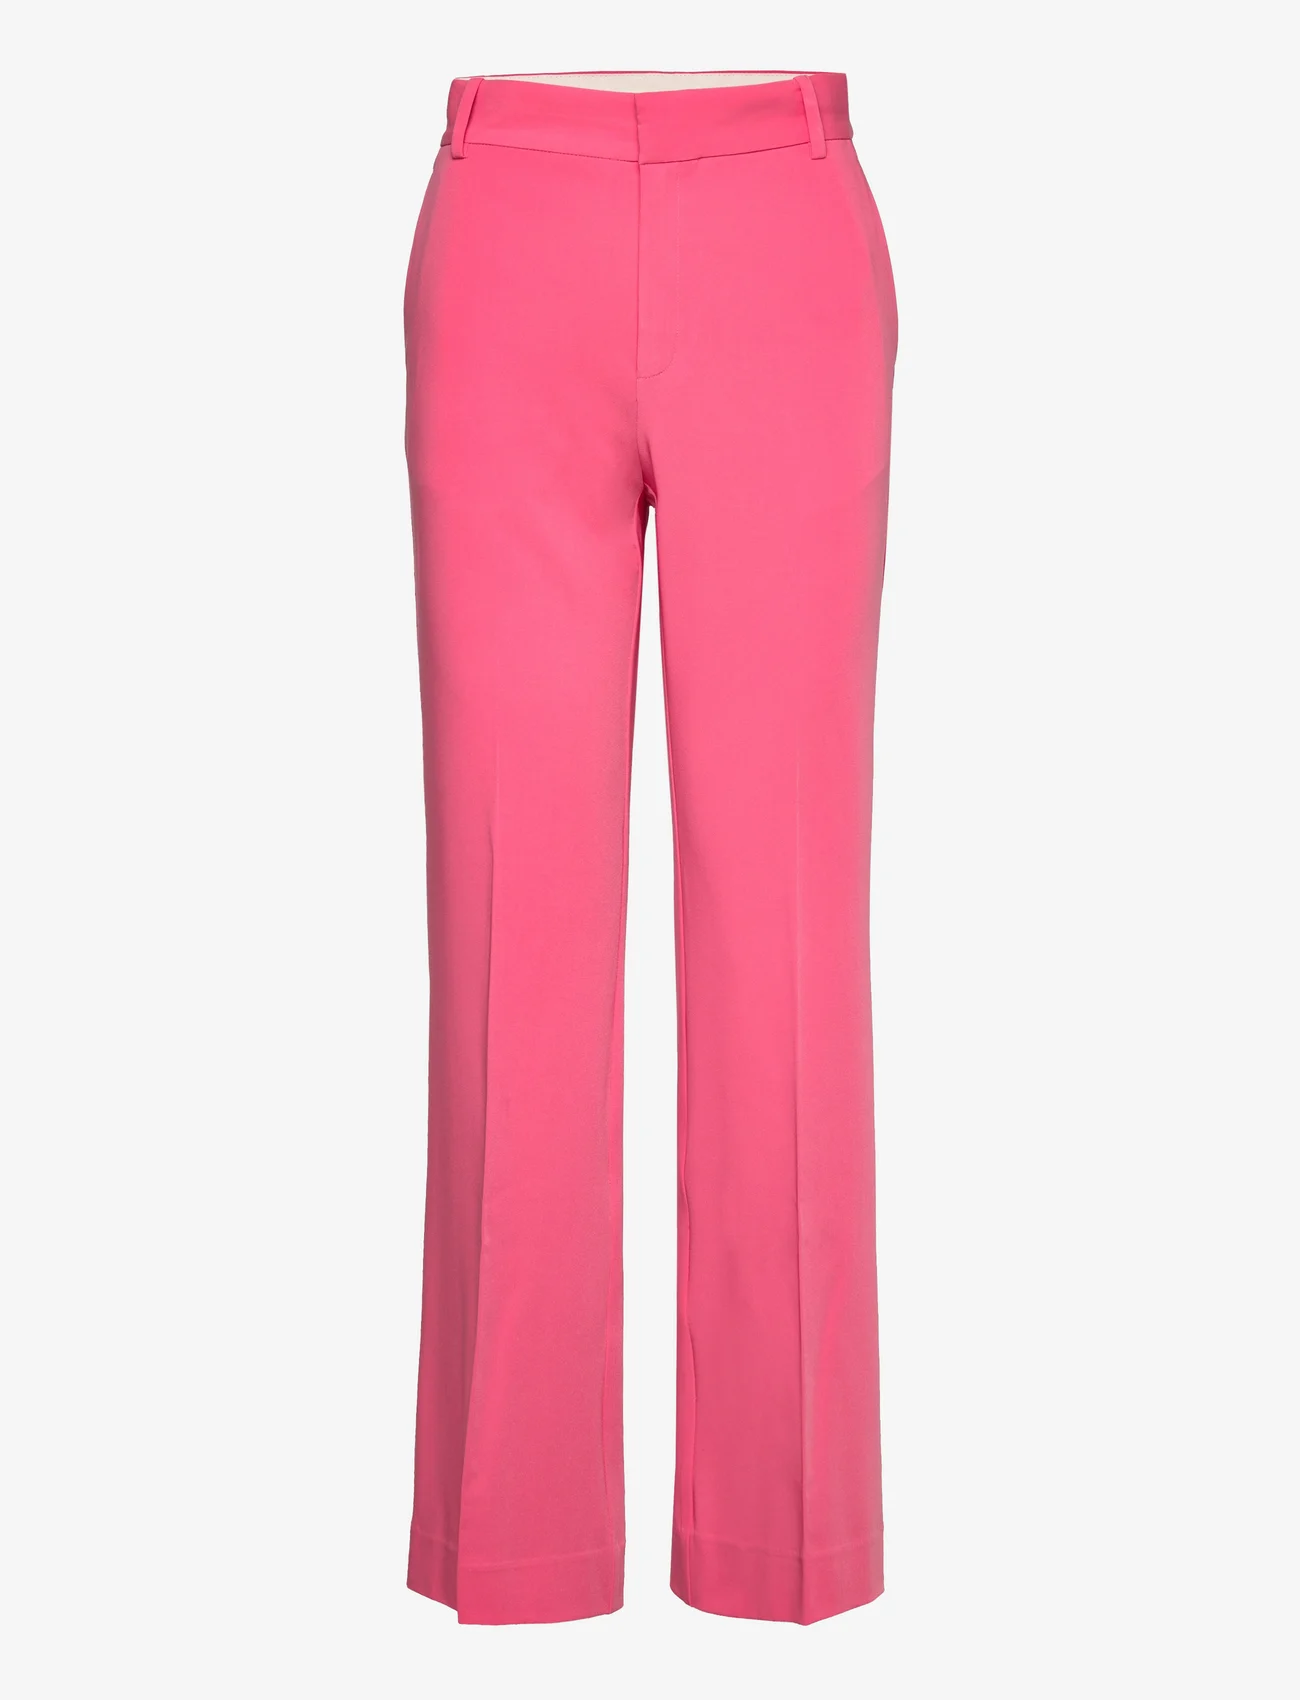 InWear - VetaIW Adian Bootcut Pant - festklær til outlet-priser - pink rose - 0